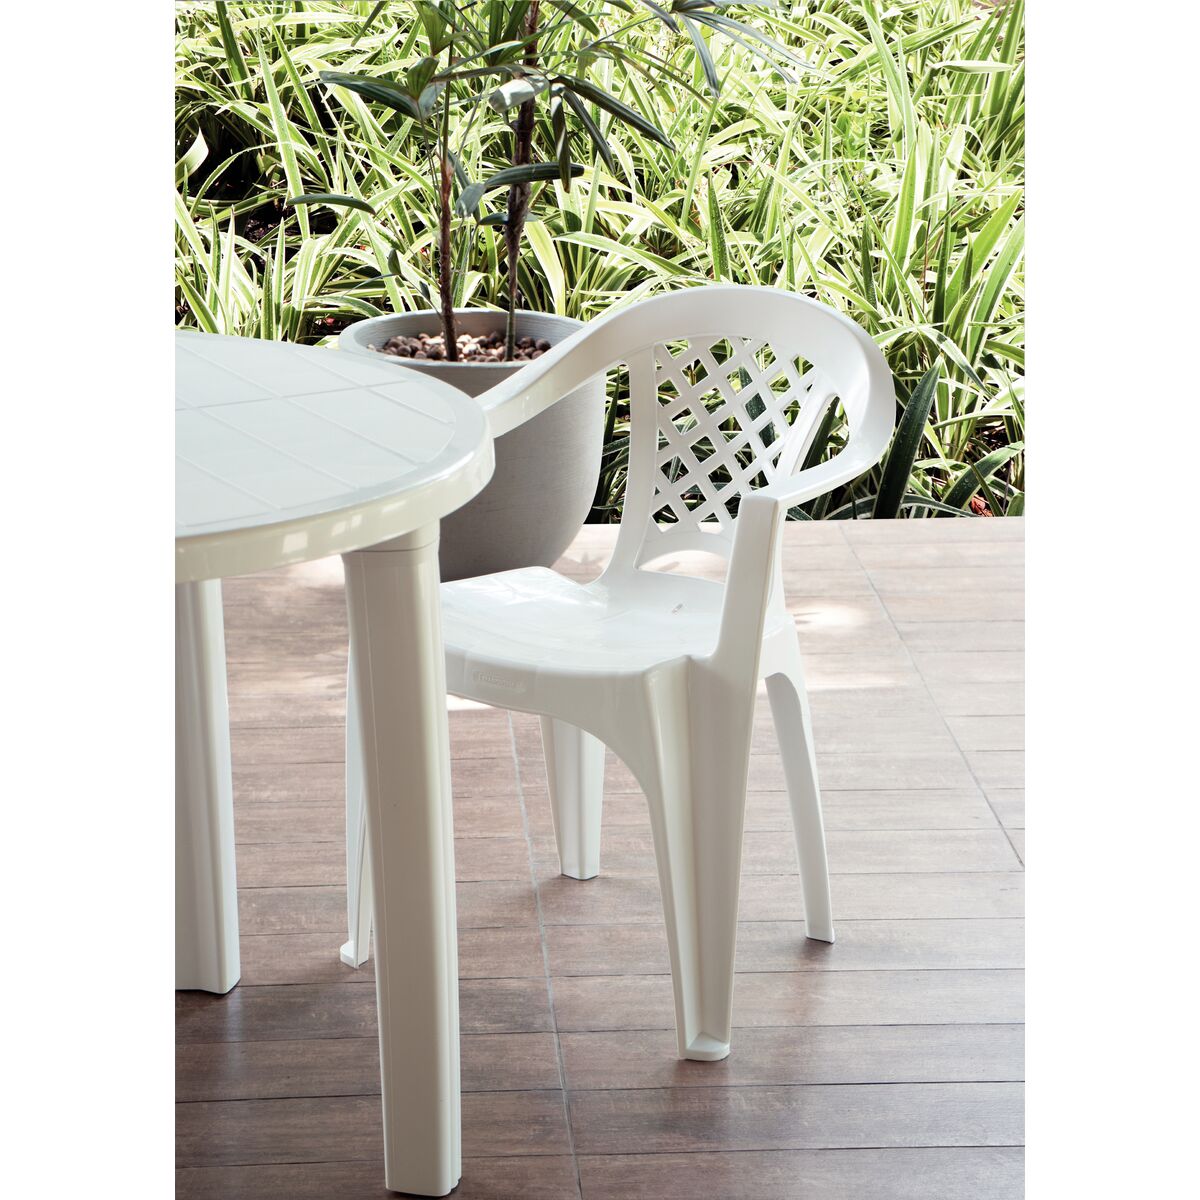 Cadeira Iguape em Polipropileno Branco - 92221010 - TRAMONTINA P5406